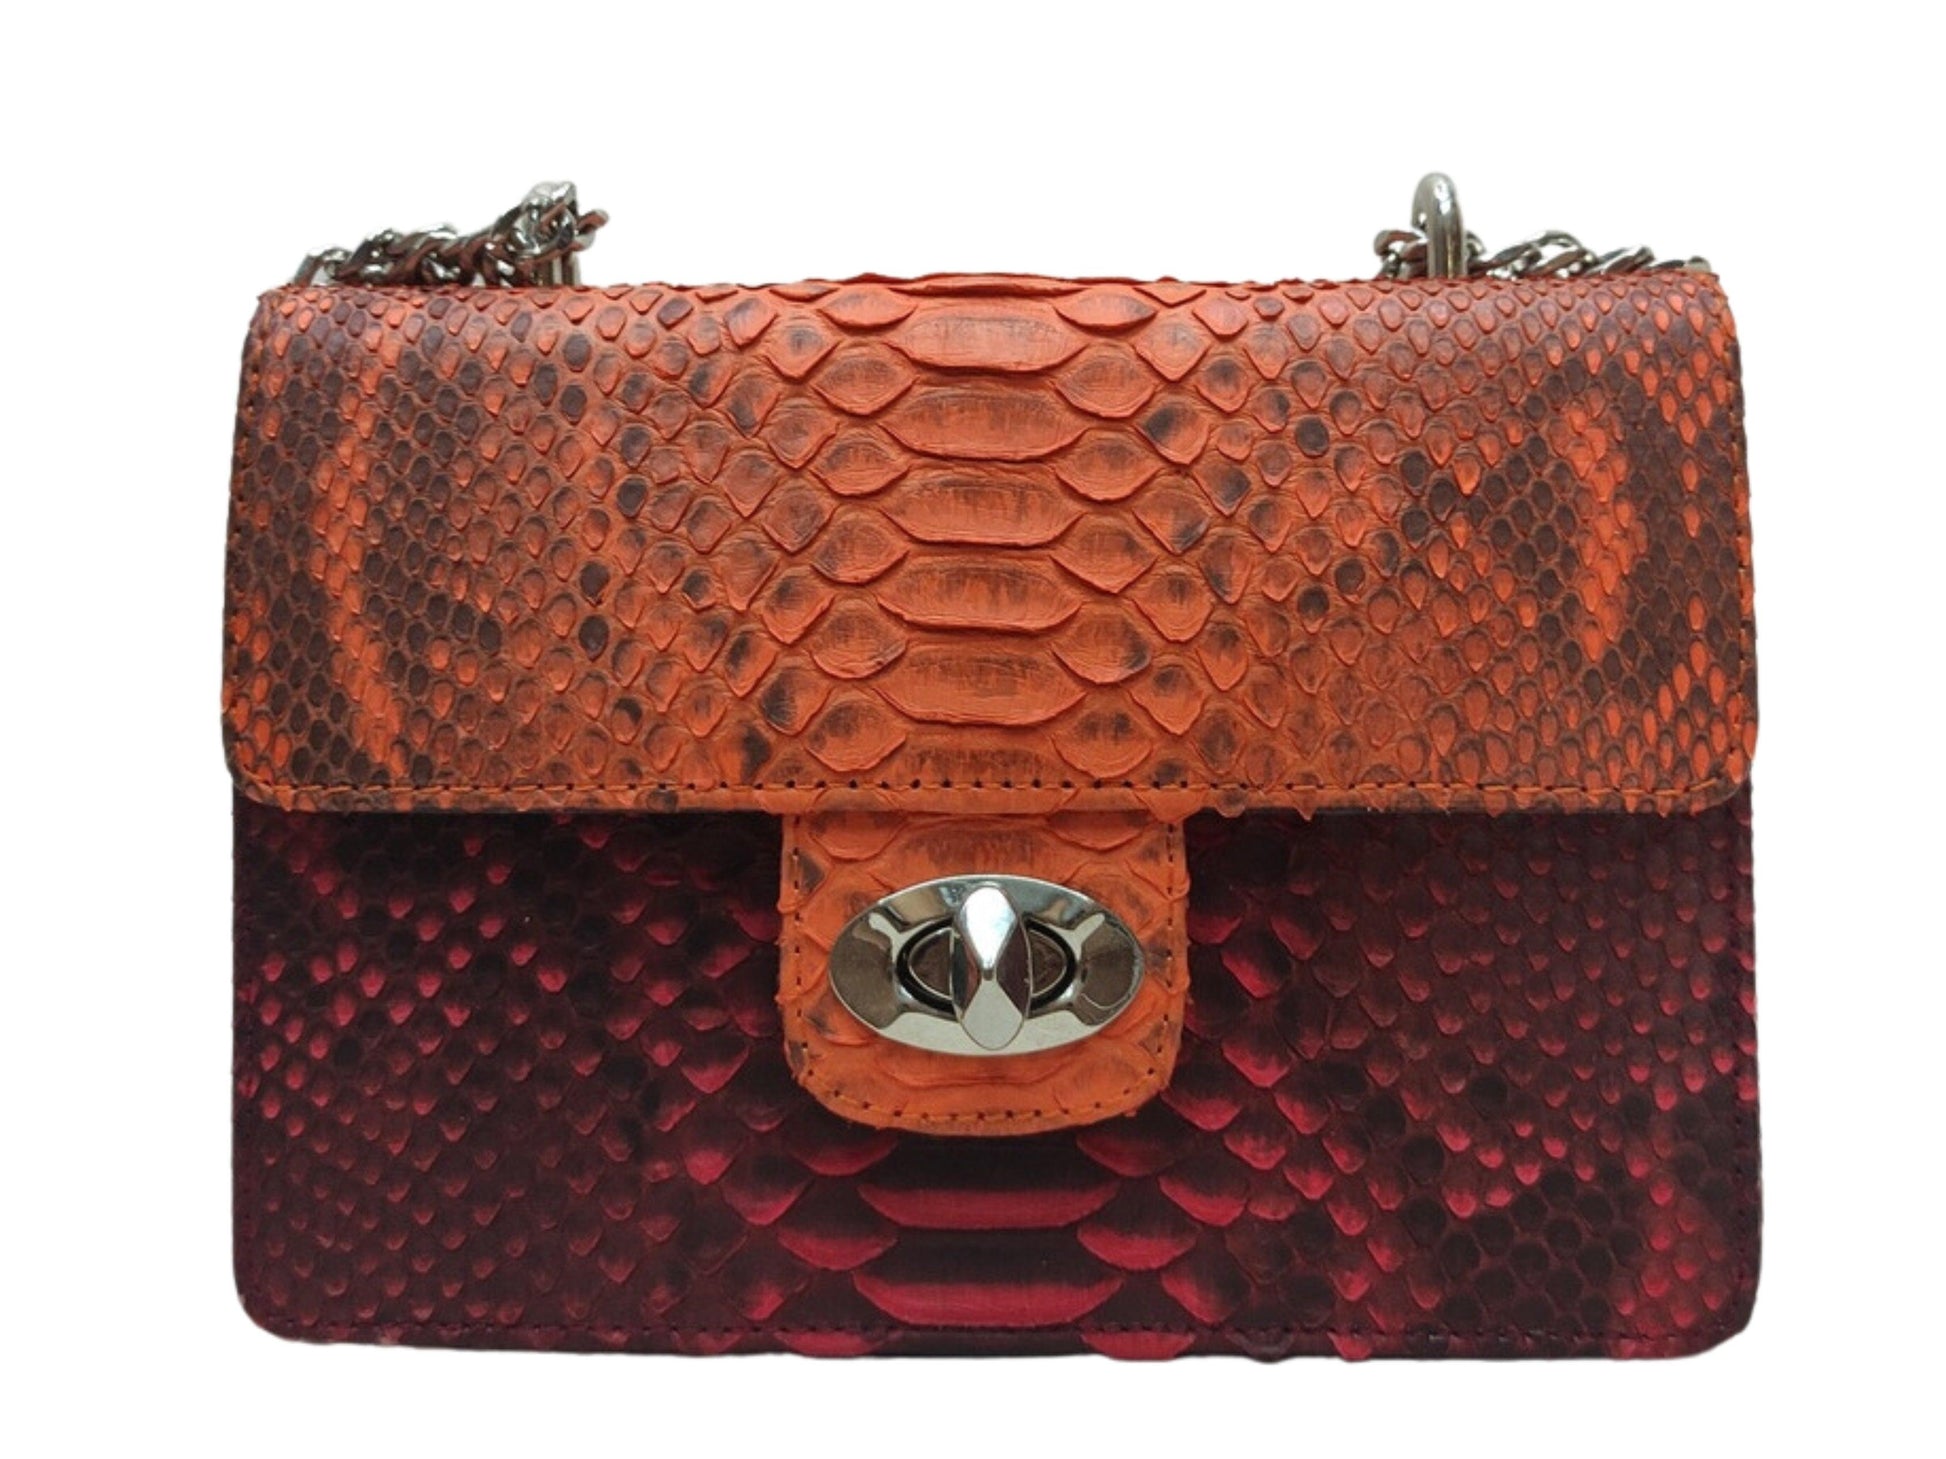 Python Bags Snakeskin Evening Handbag for Women Red Terracotta Python Jacket by LFM Fashion